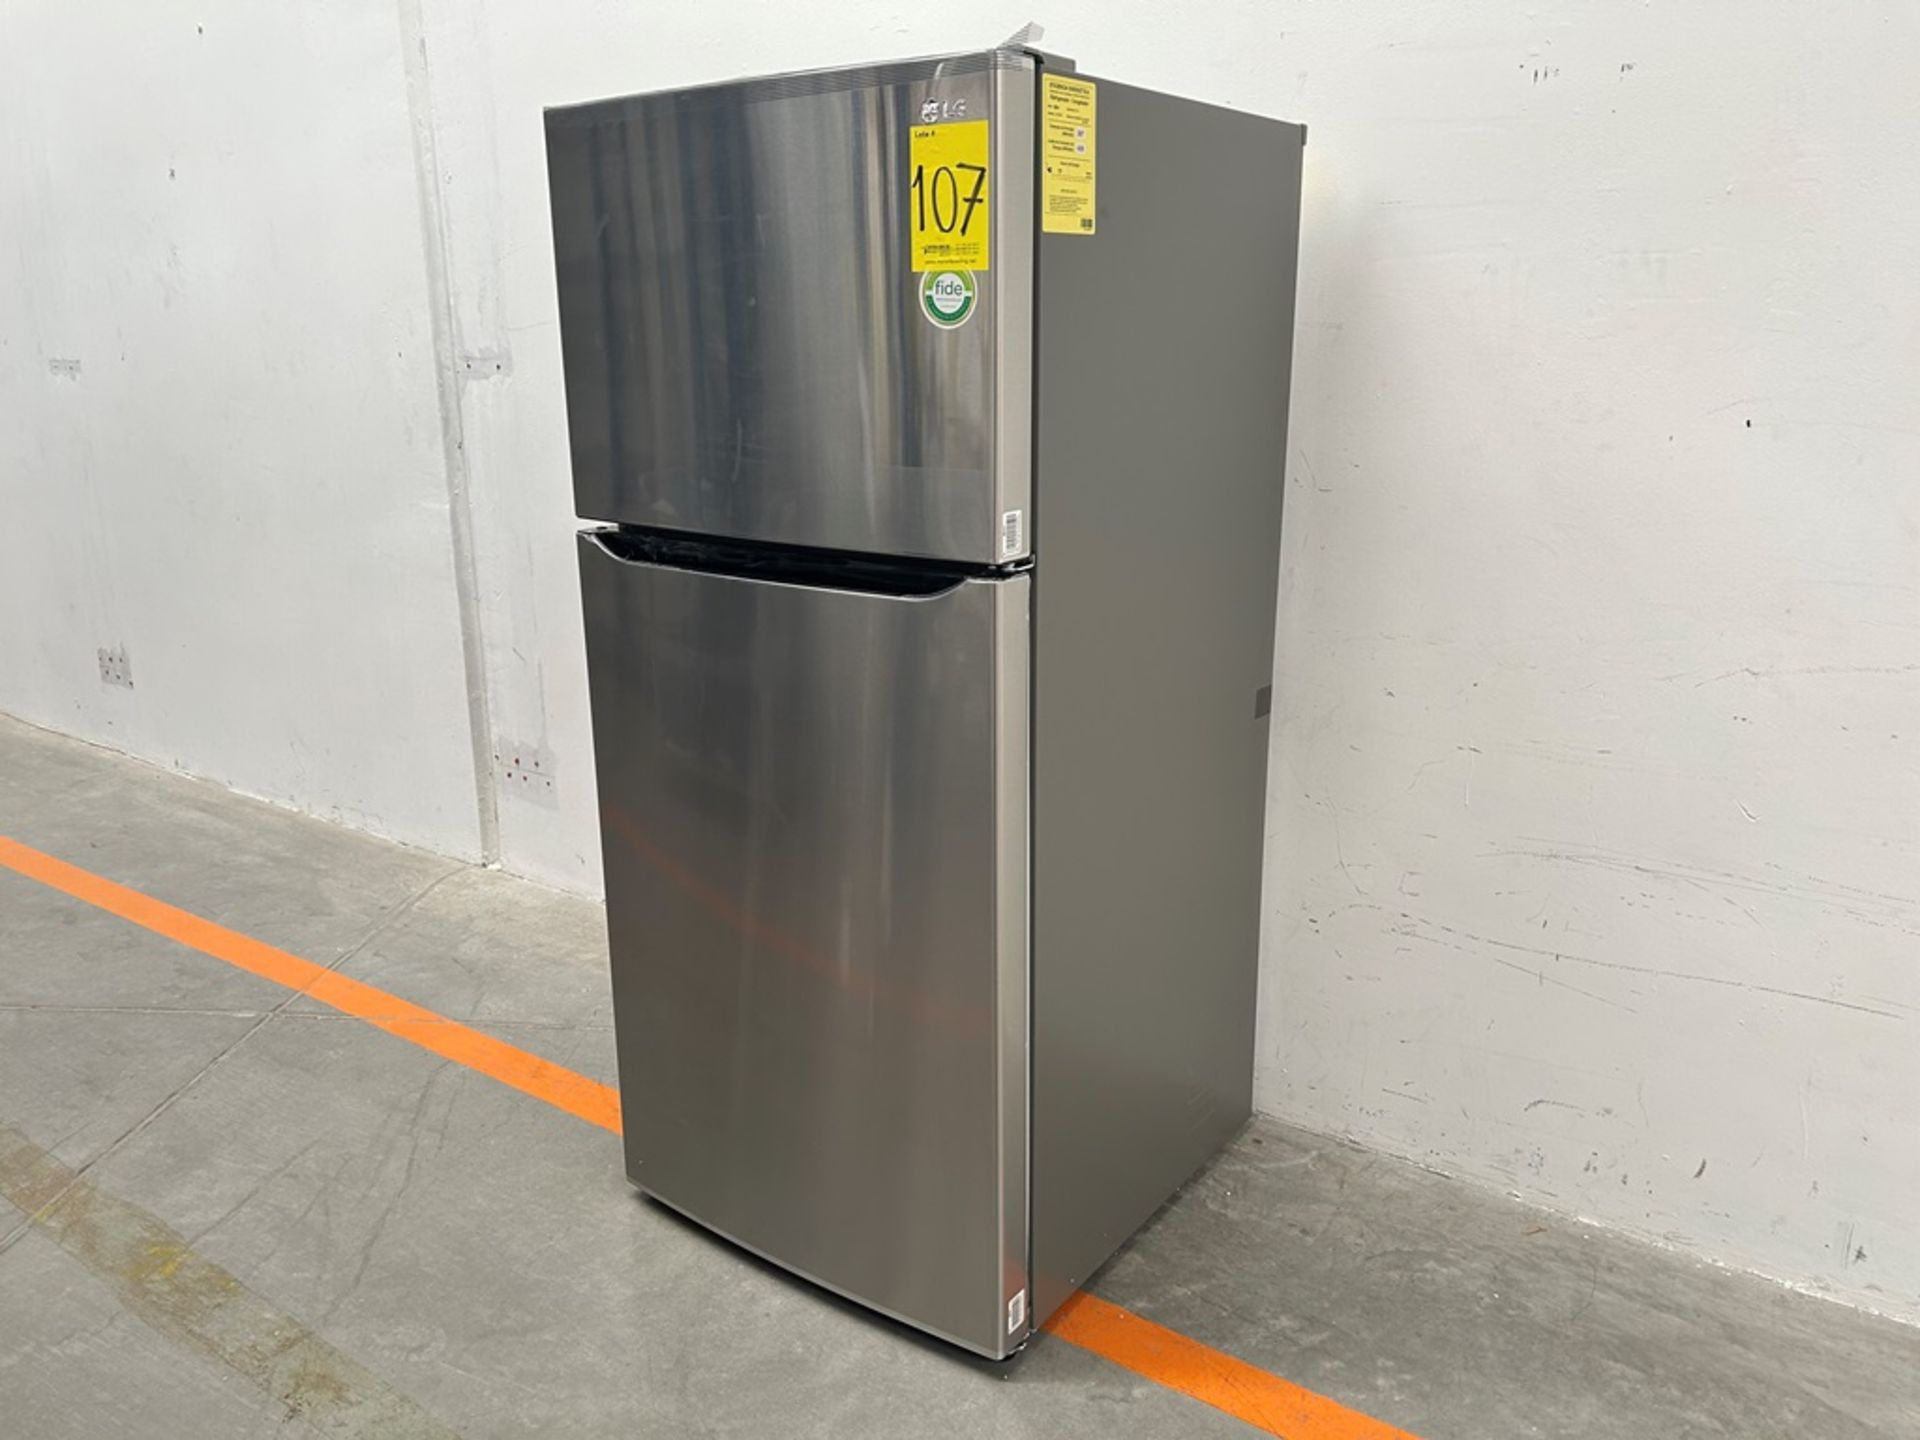 (NUEVO) Refrigerador Marca LG, Modelo LT57BPSX, Serie 1N322, Color GRIS (Golpe leve frontal, Favor - Image 2 of 7